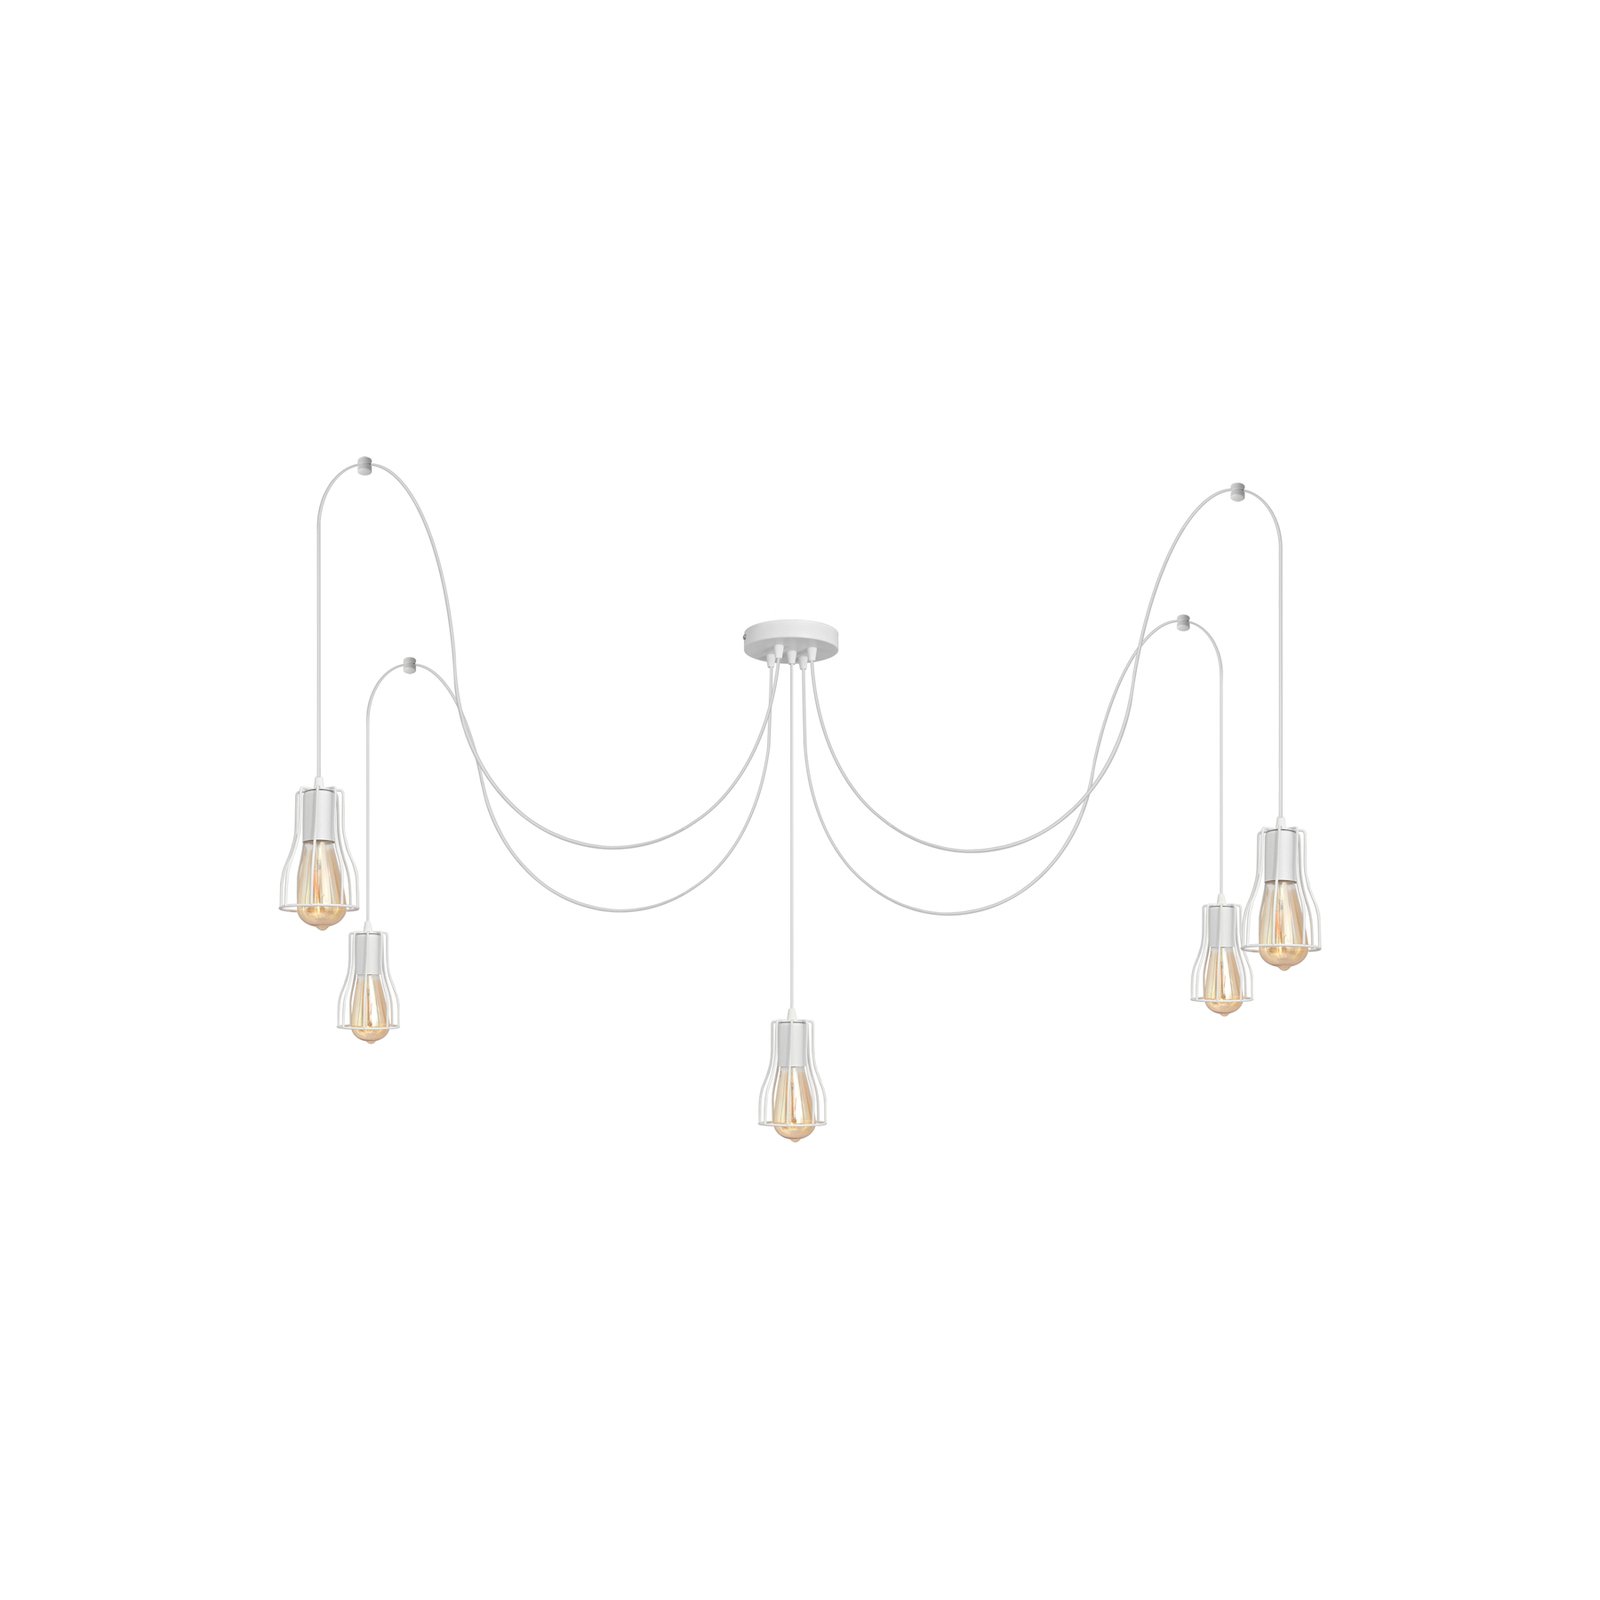 Tube lange hanglamp, wit, metaal, 5-lamps, E27